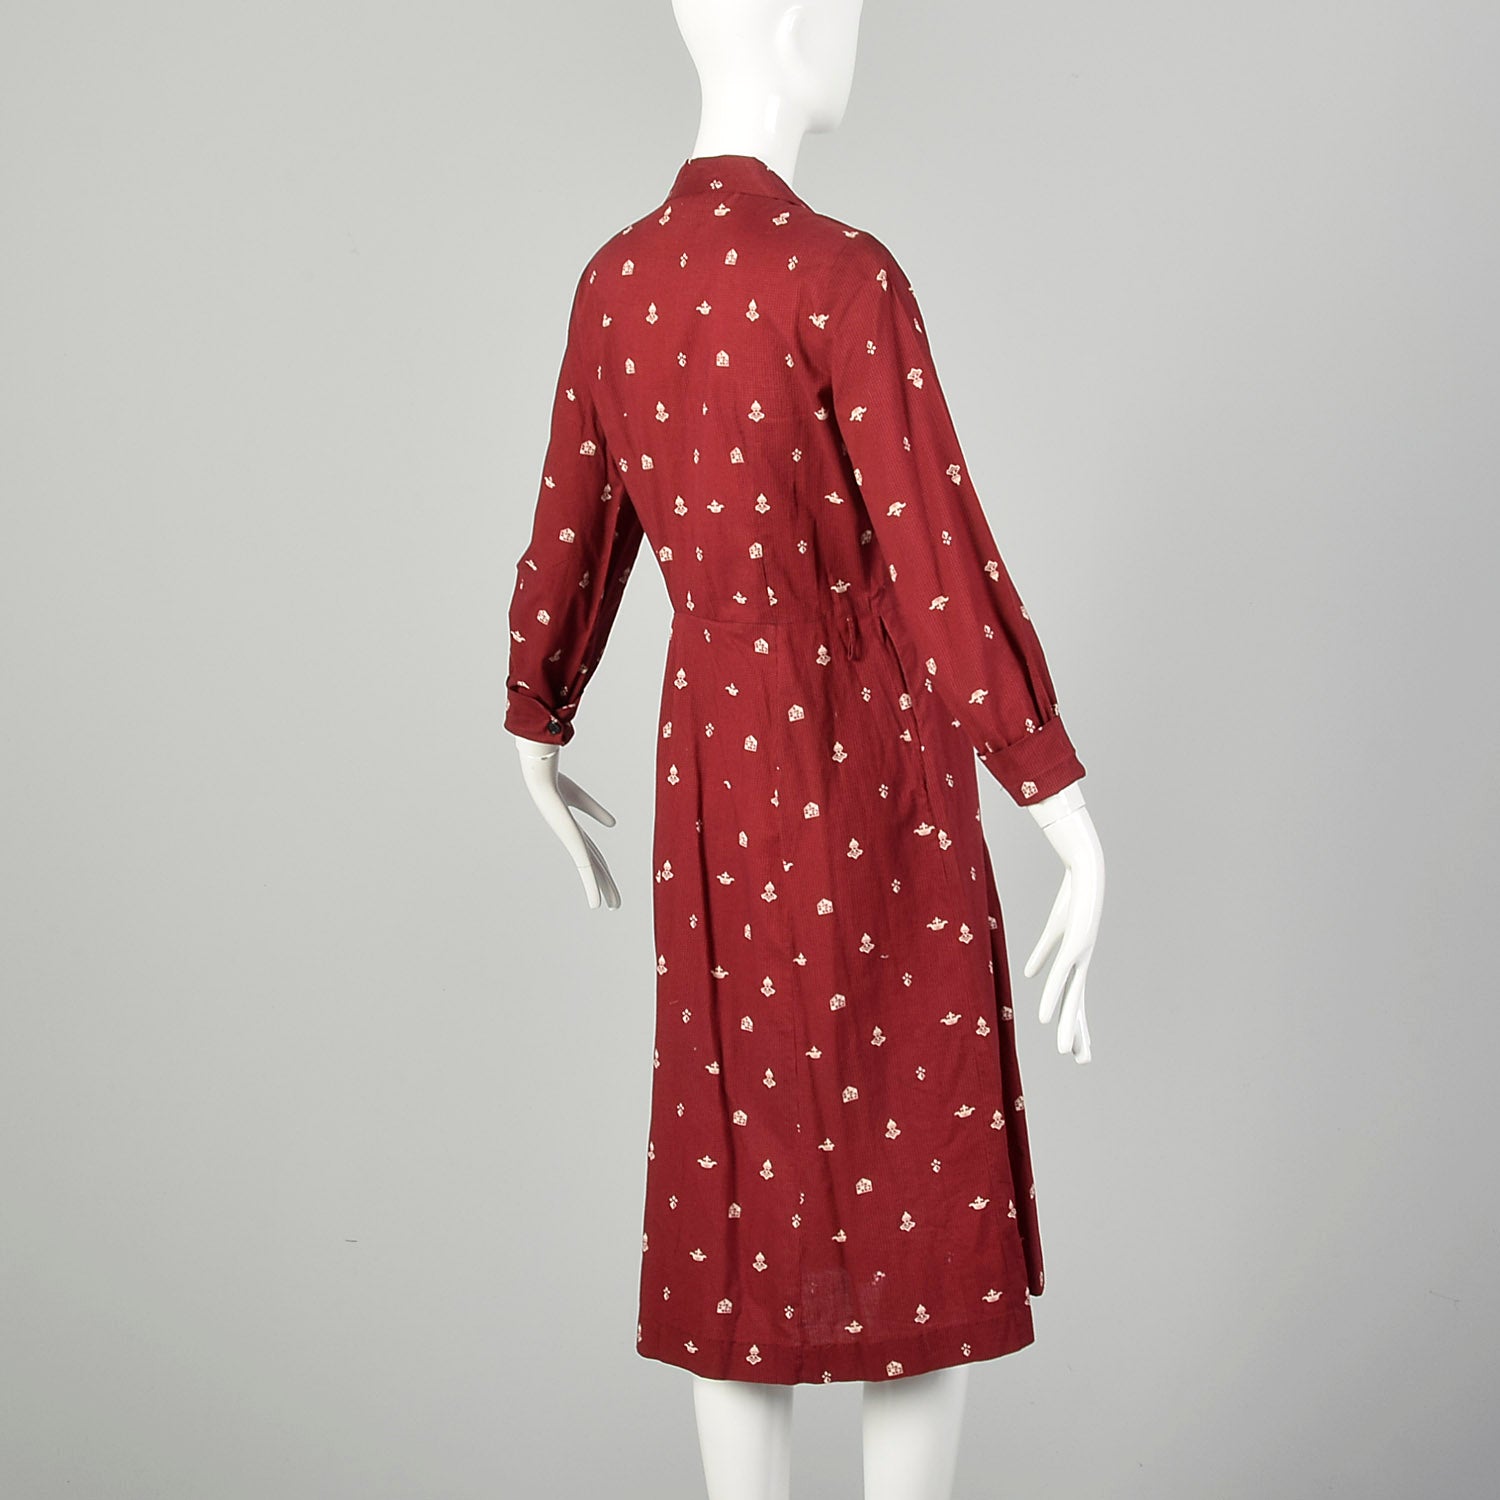 Medium 1950s Day Dress Cotton Novelty Print Casual Long Sleeve